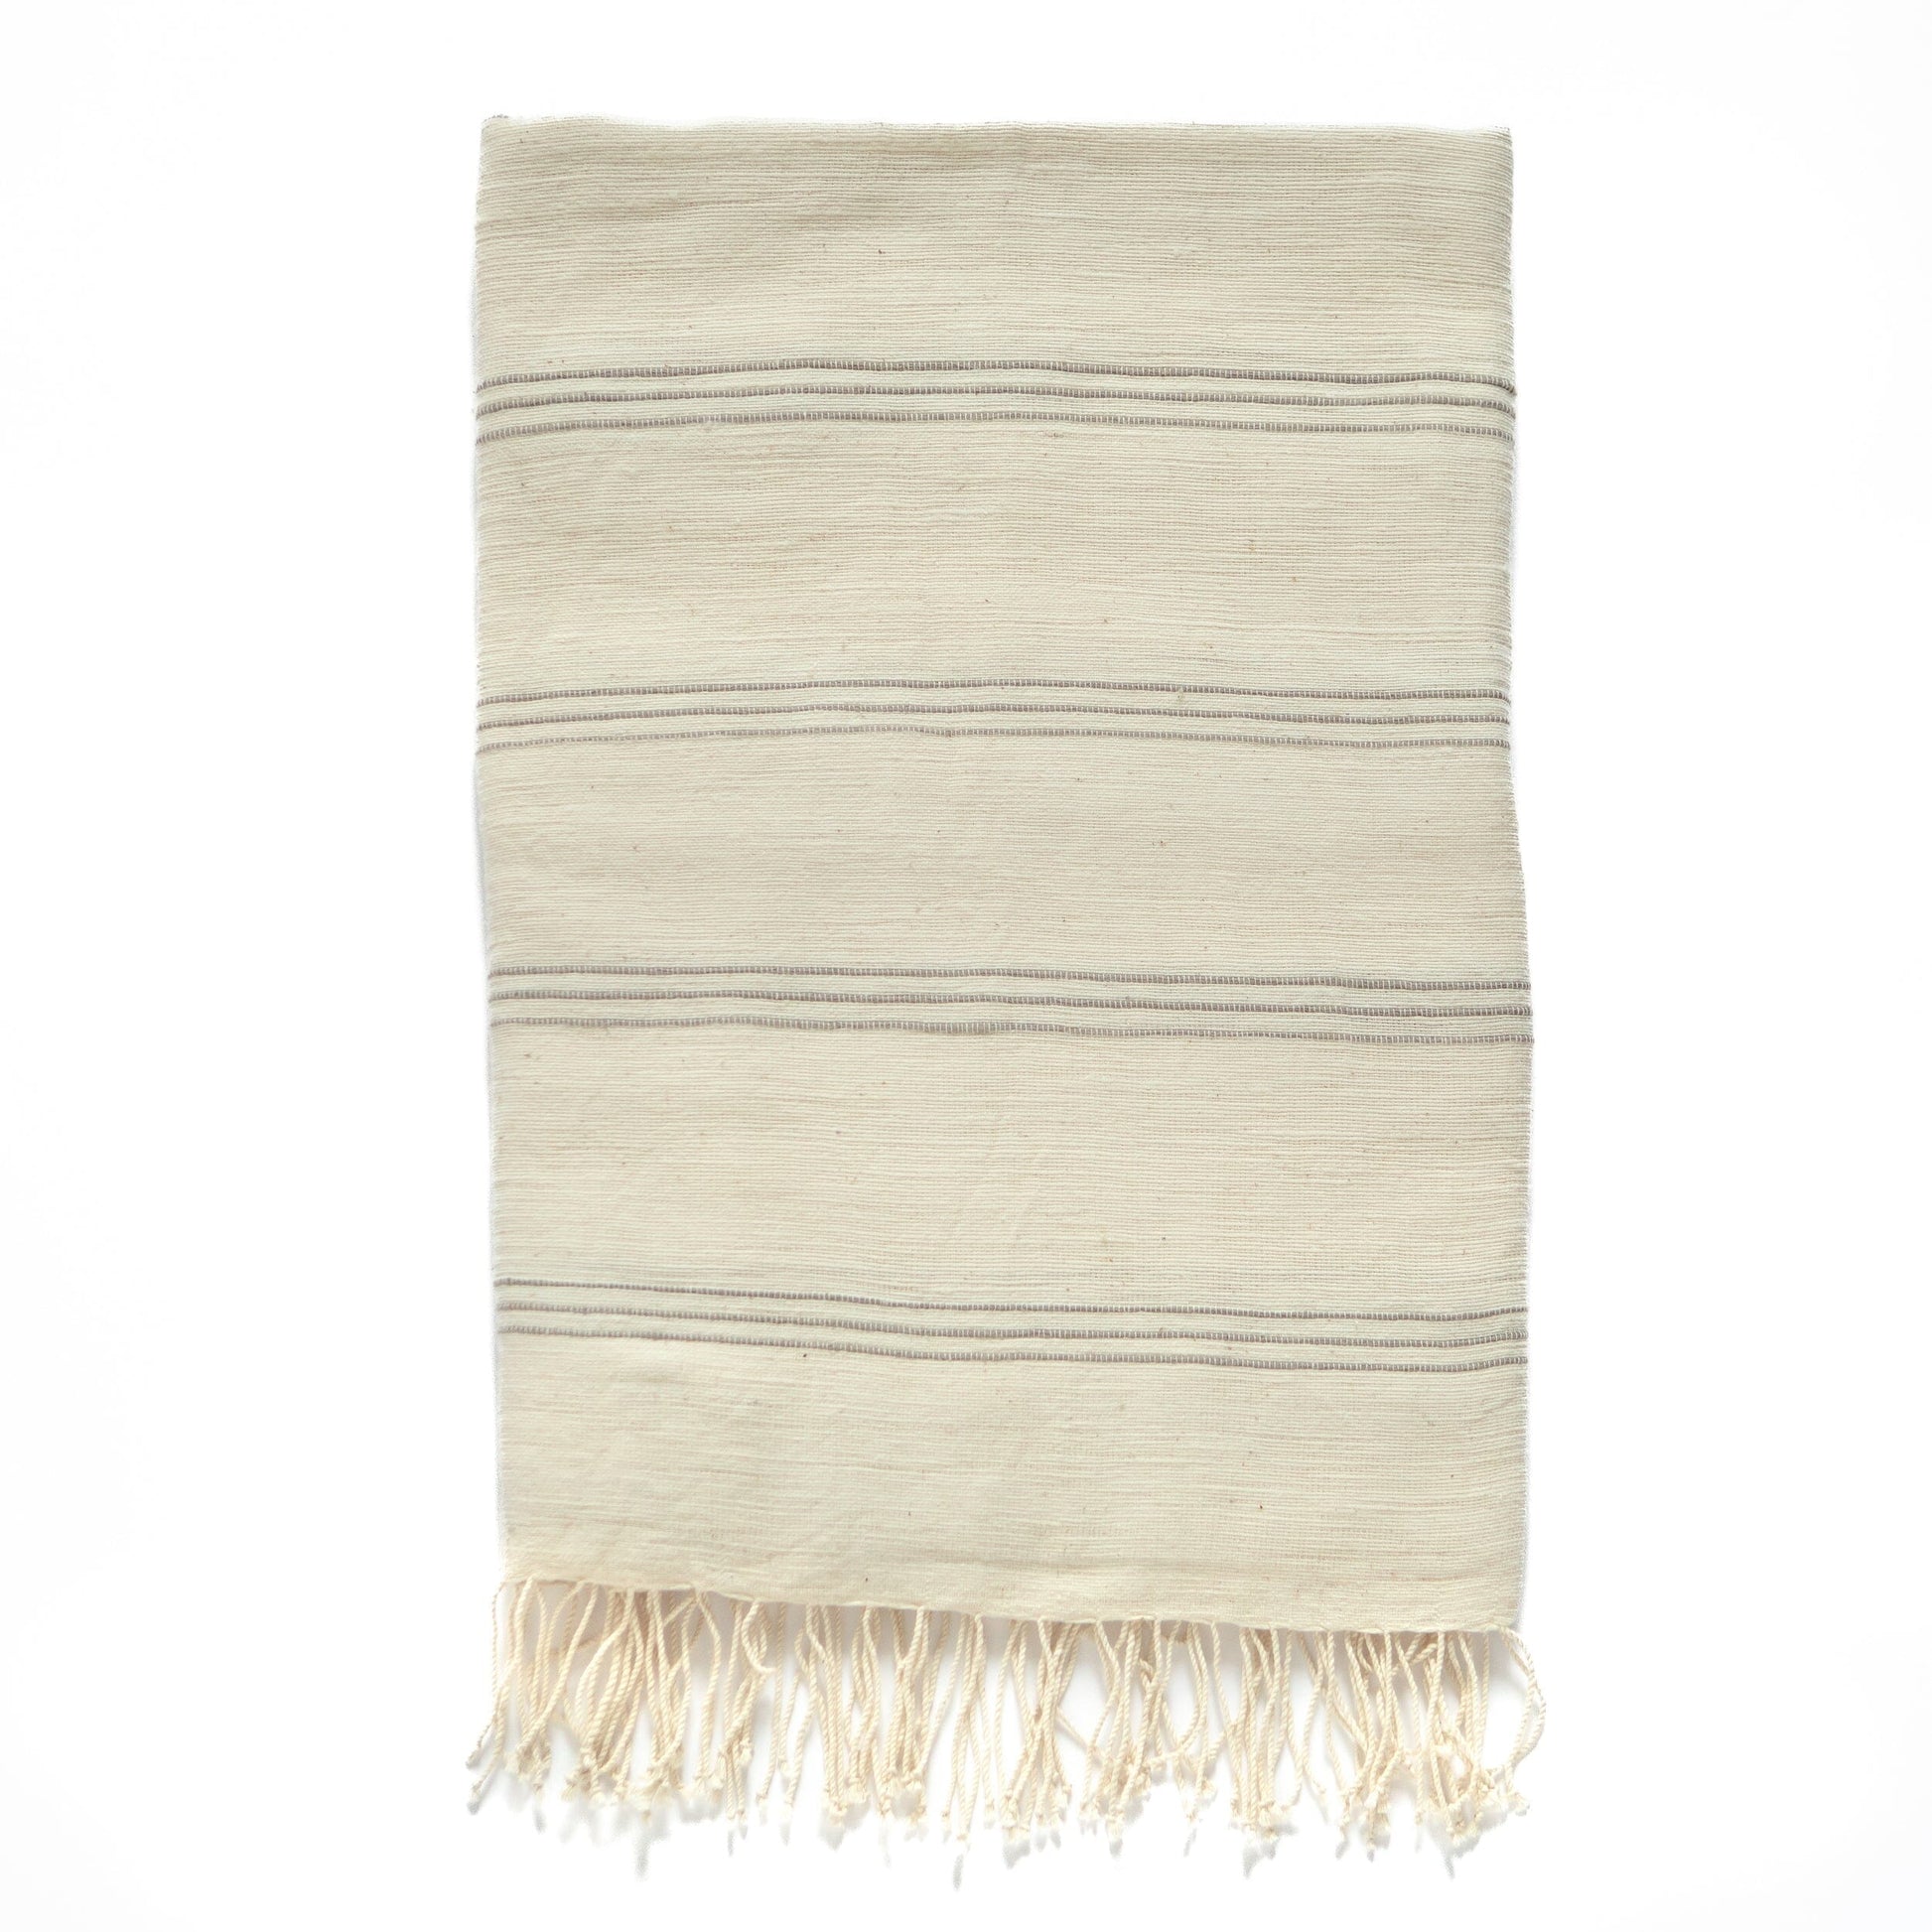 Shebelle towel bath towel sabahar Ivory/stone 